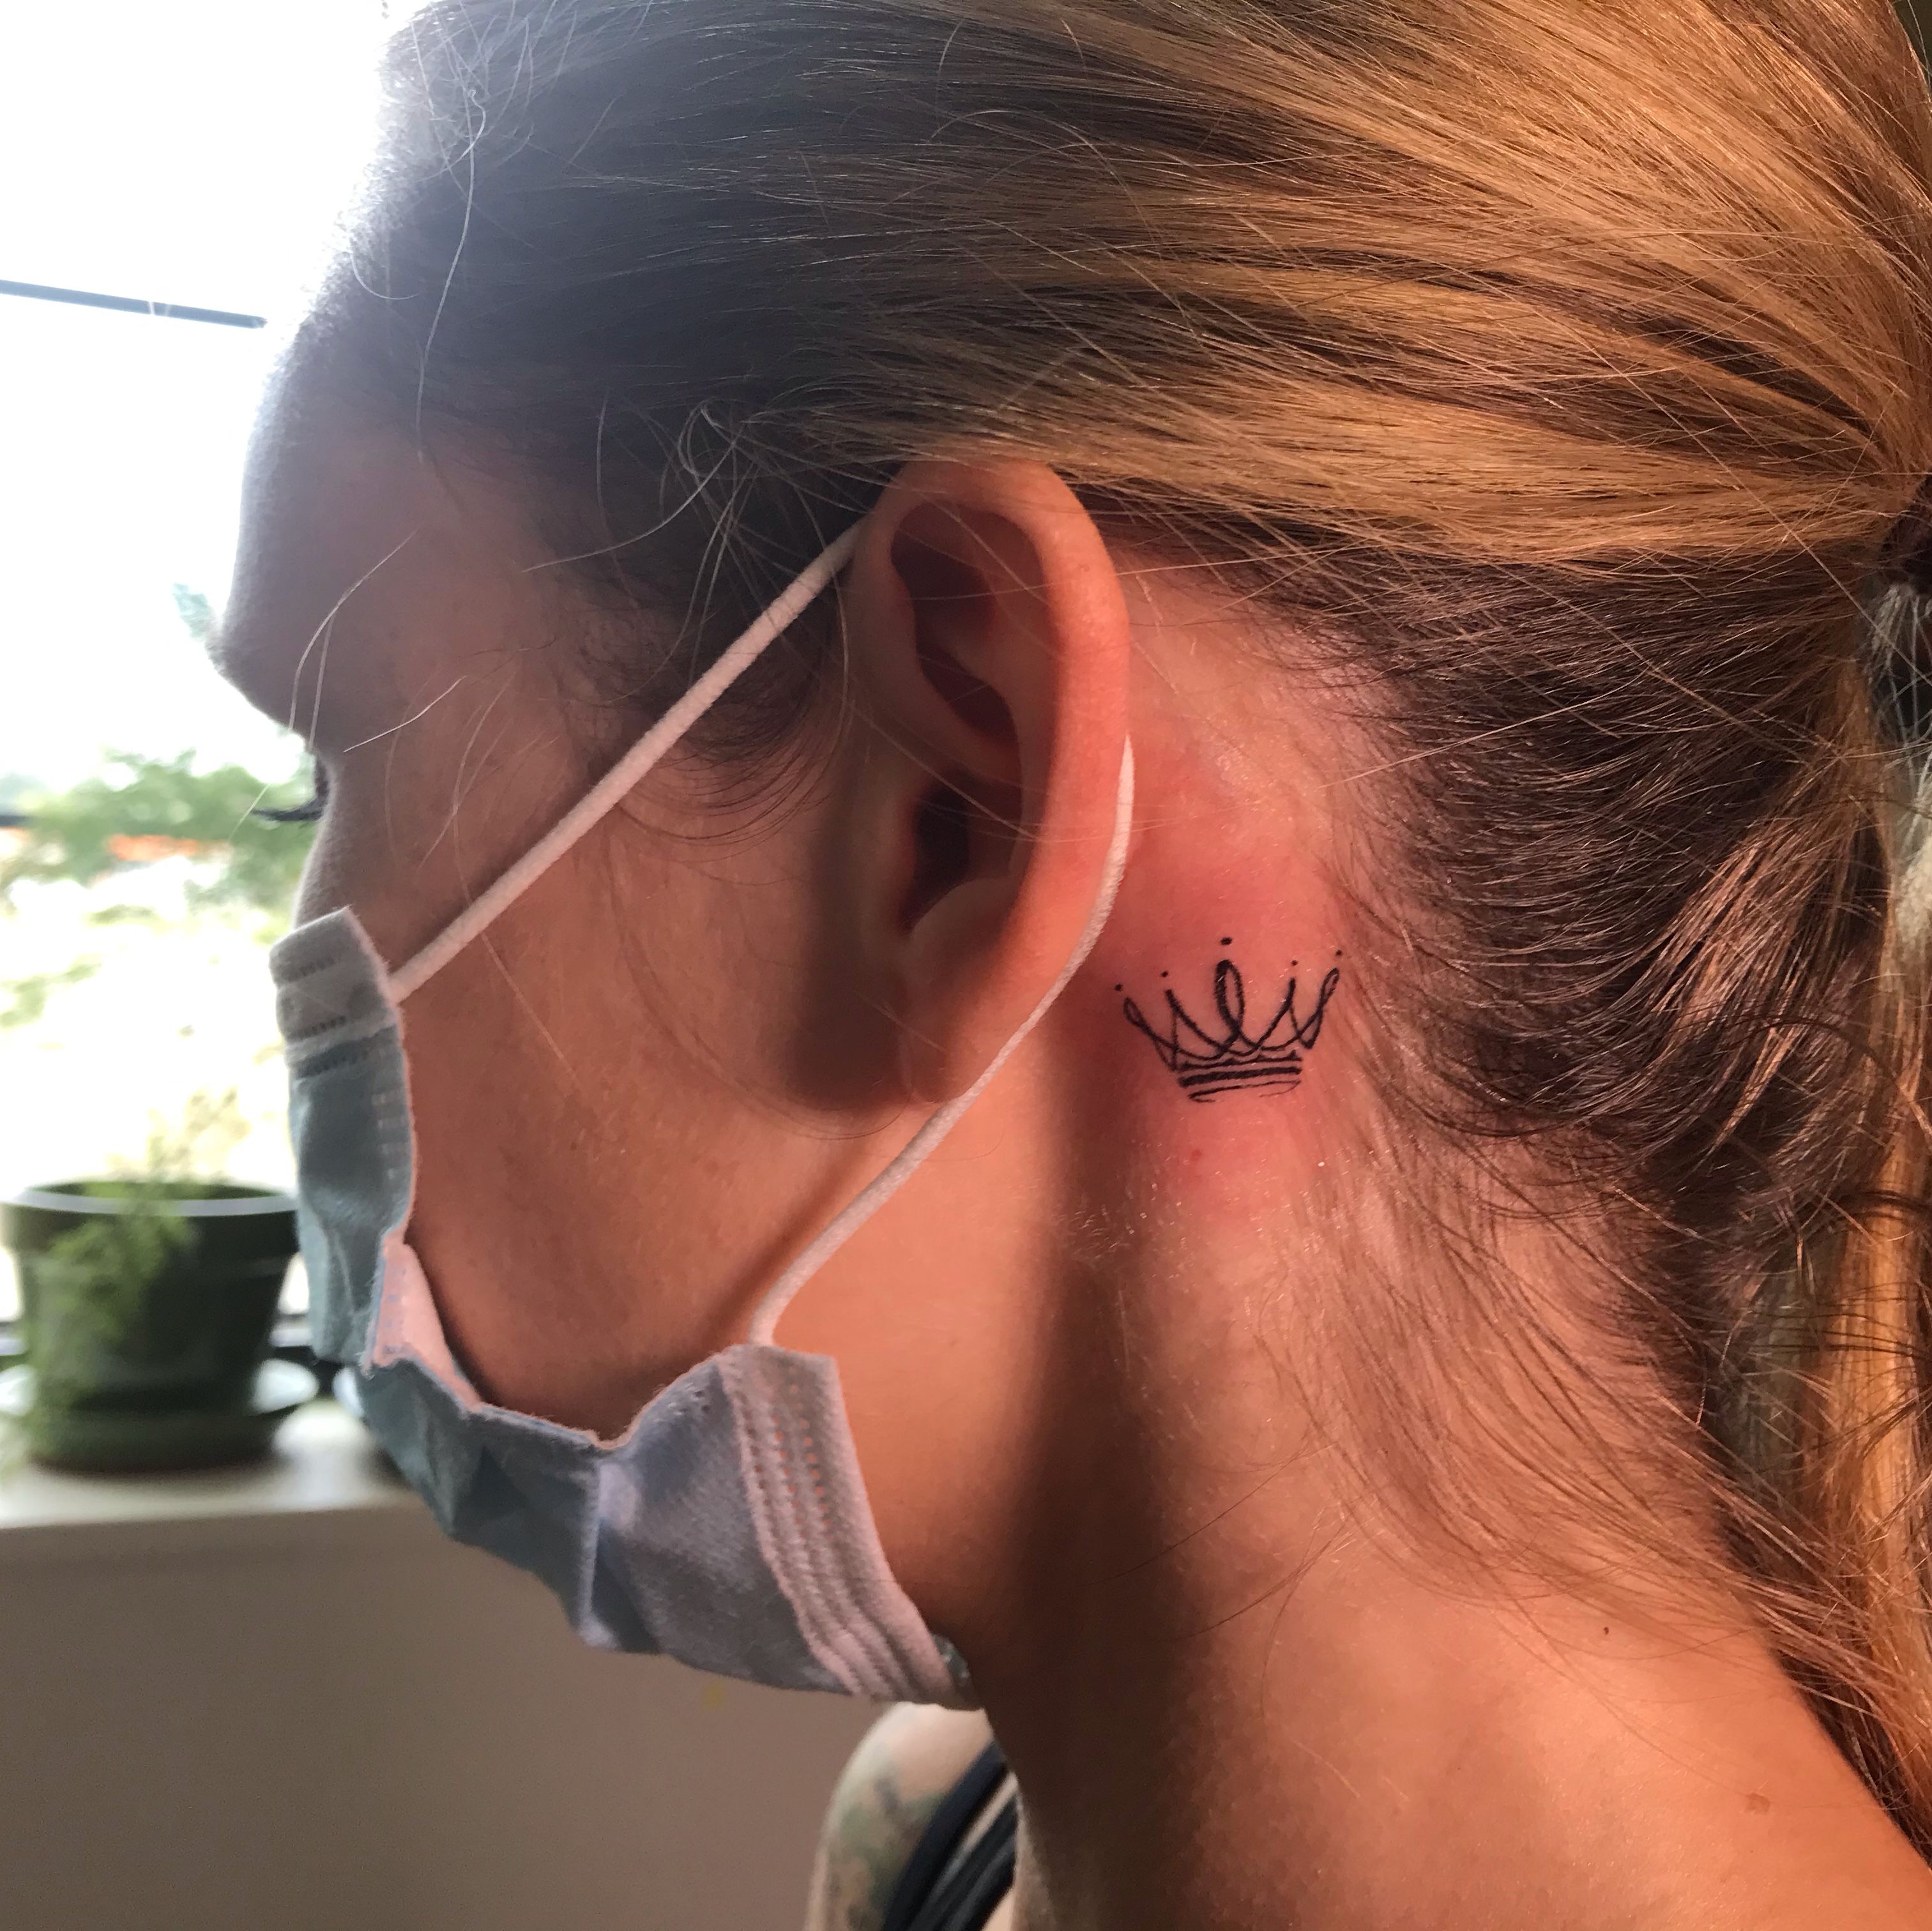 Reginae Carter Initial Behind Ear Tattoo  Steal Her Style